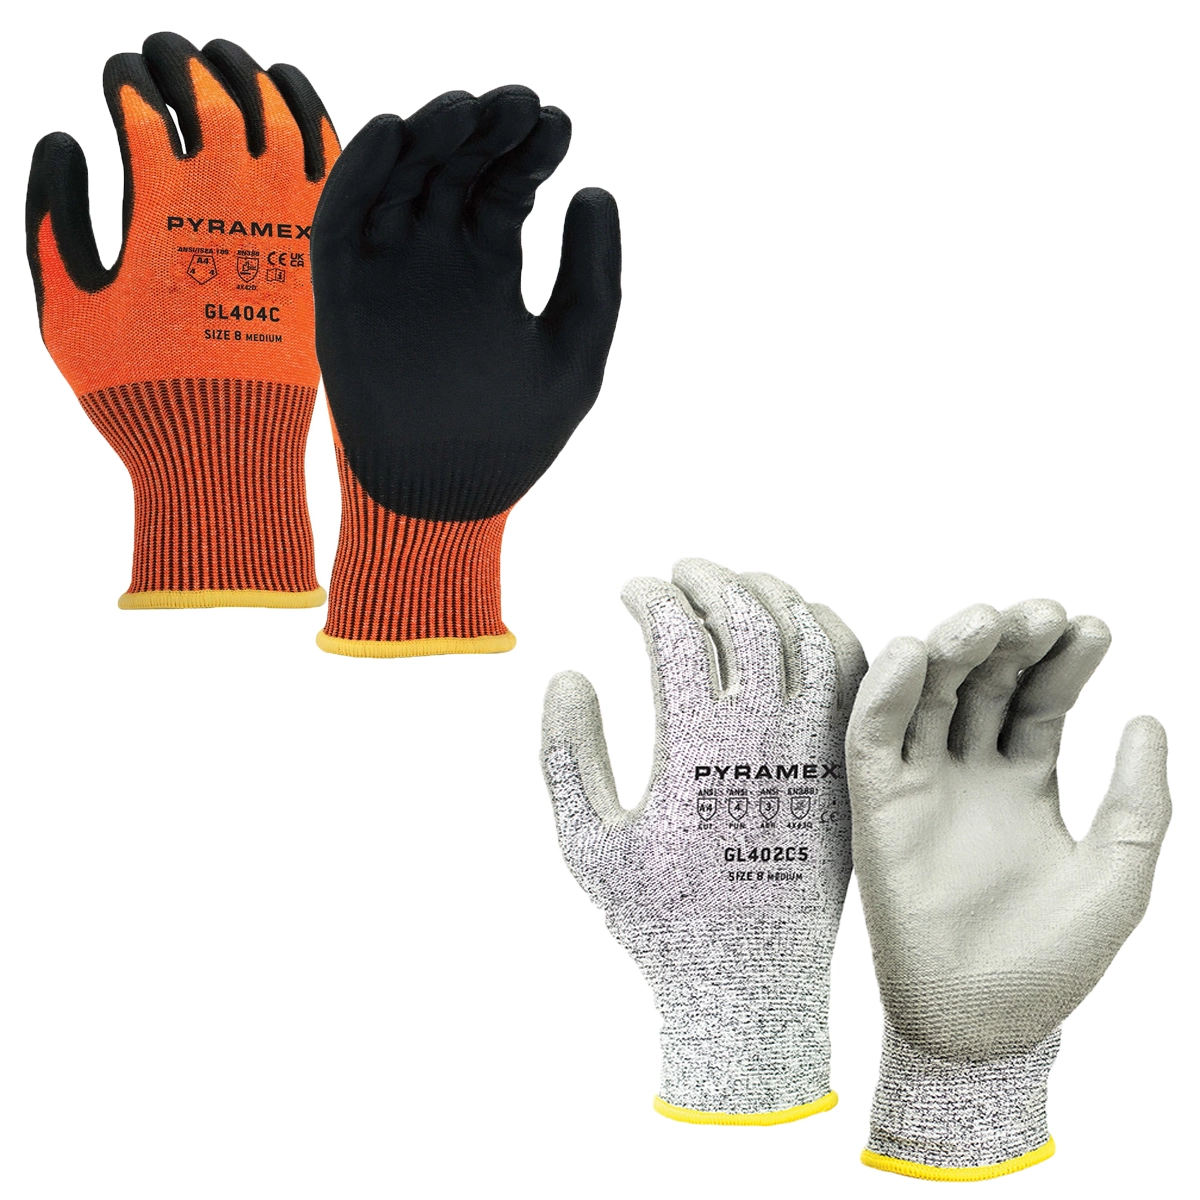 Cut Level 4 Reinforced Gloves